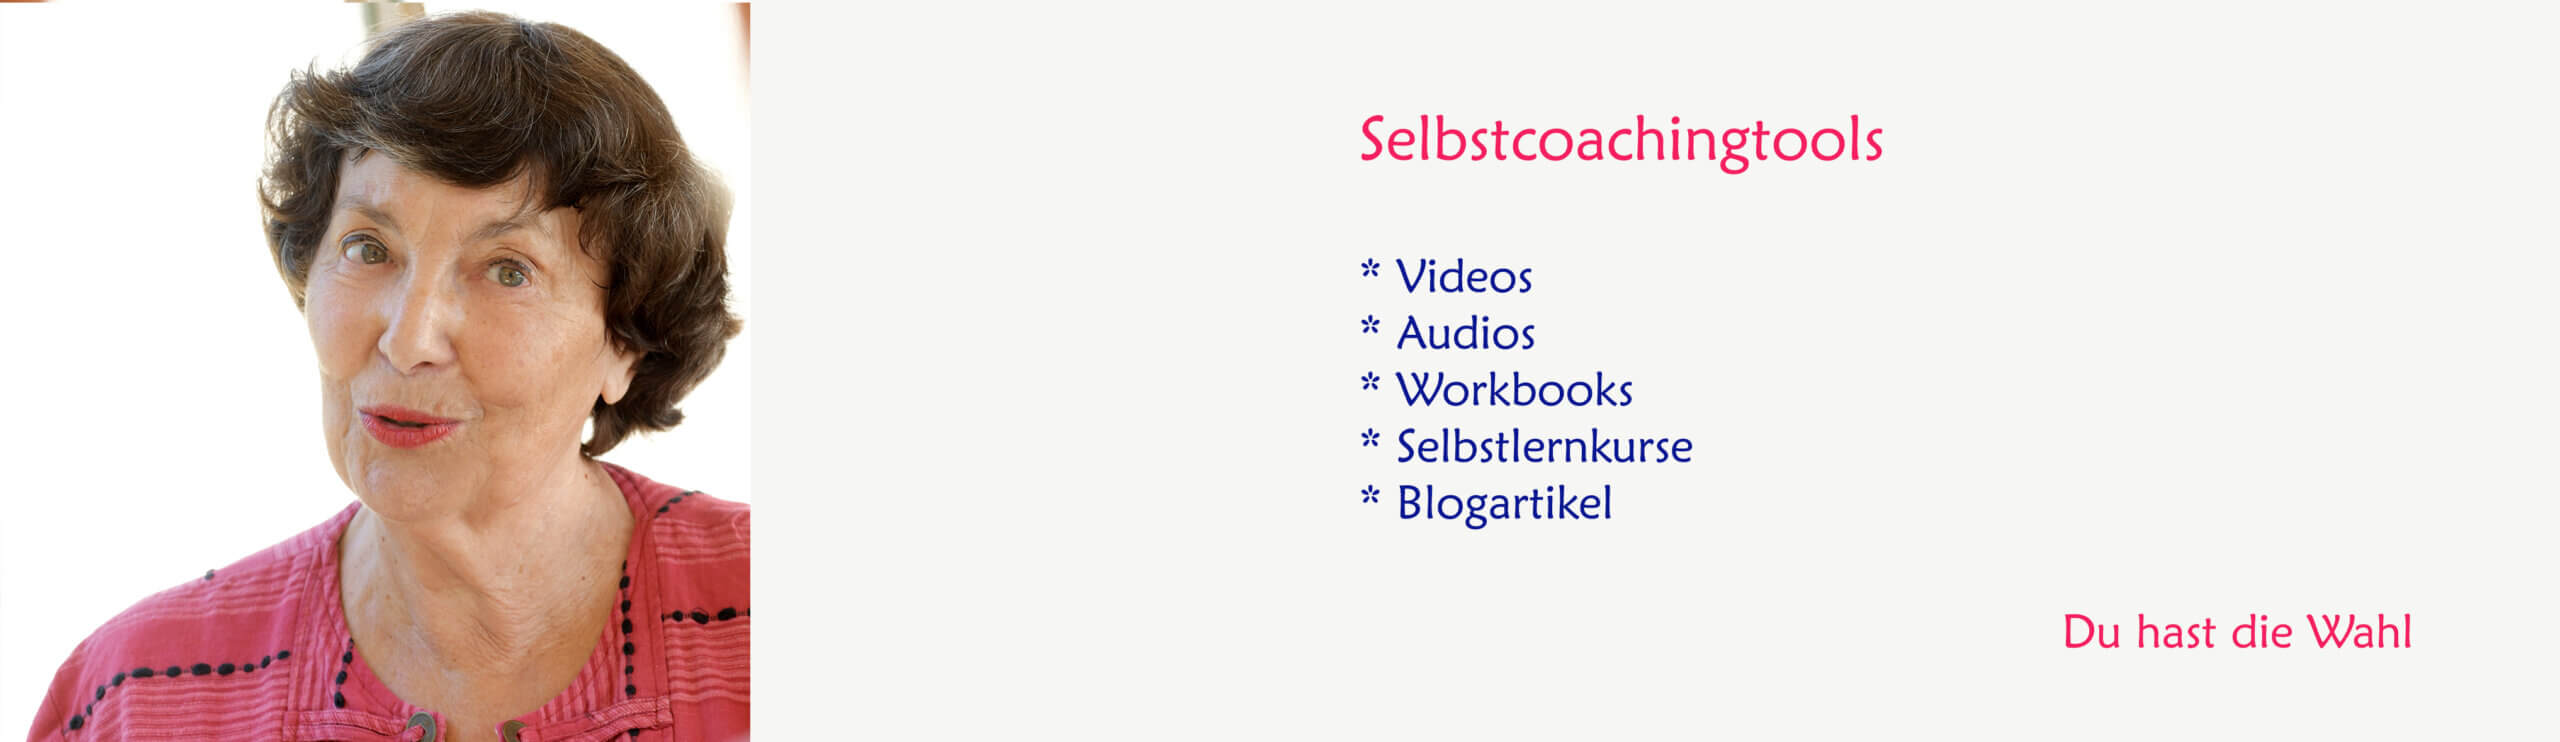 Selbstcoachingtools Bücher ebooks Videos Audios Workbooks